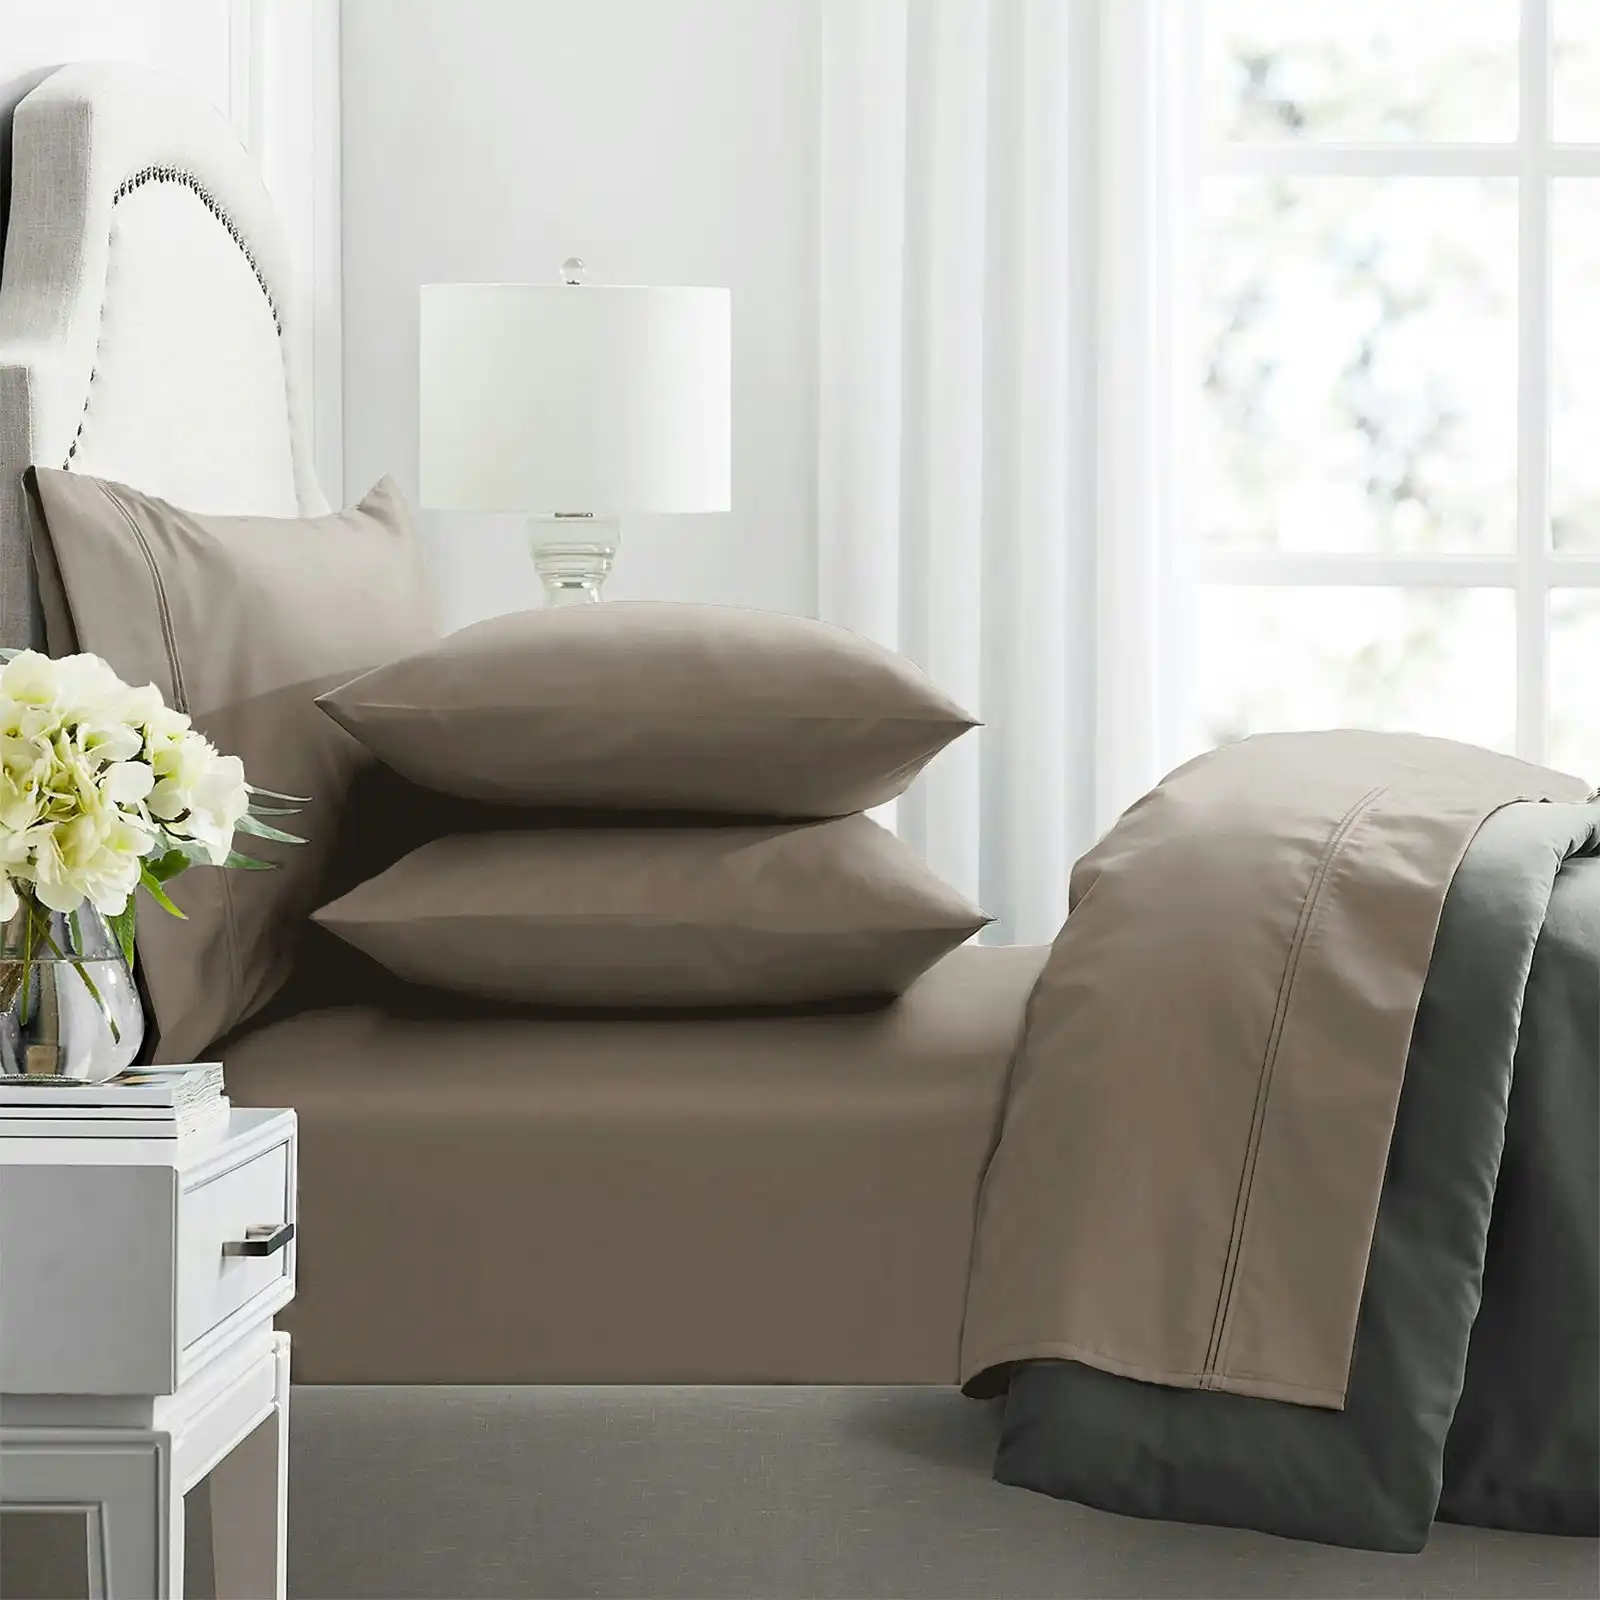 Renee Taylor King Bed Sheet Premium 1000TC  Egyptian Cotton Home Bedding Pewter